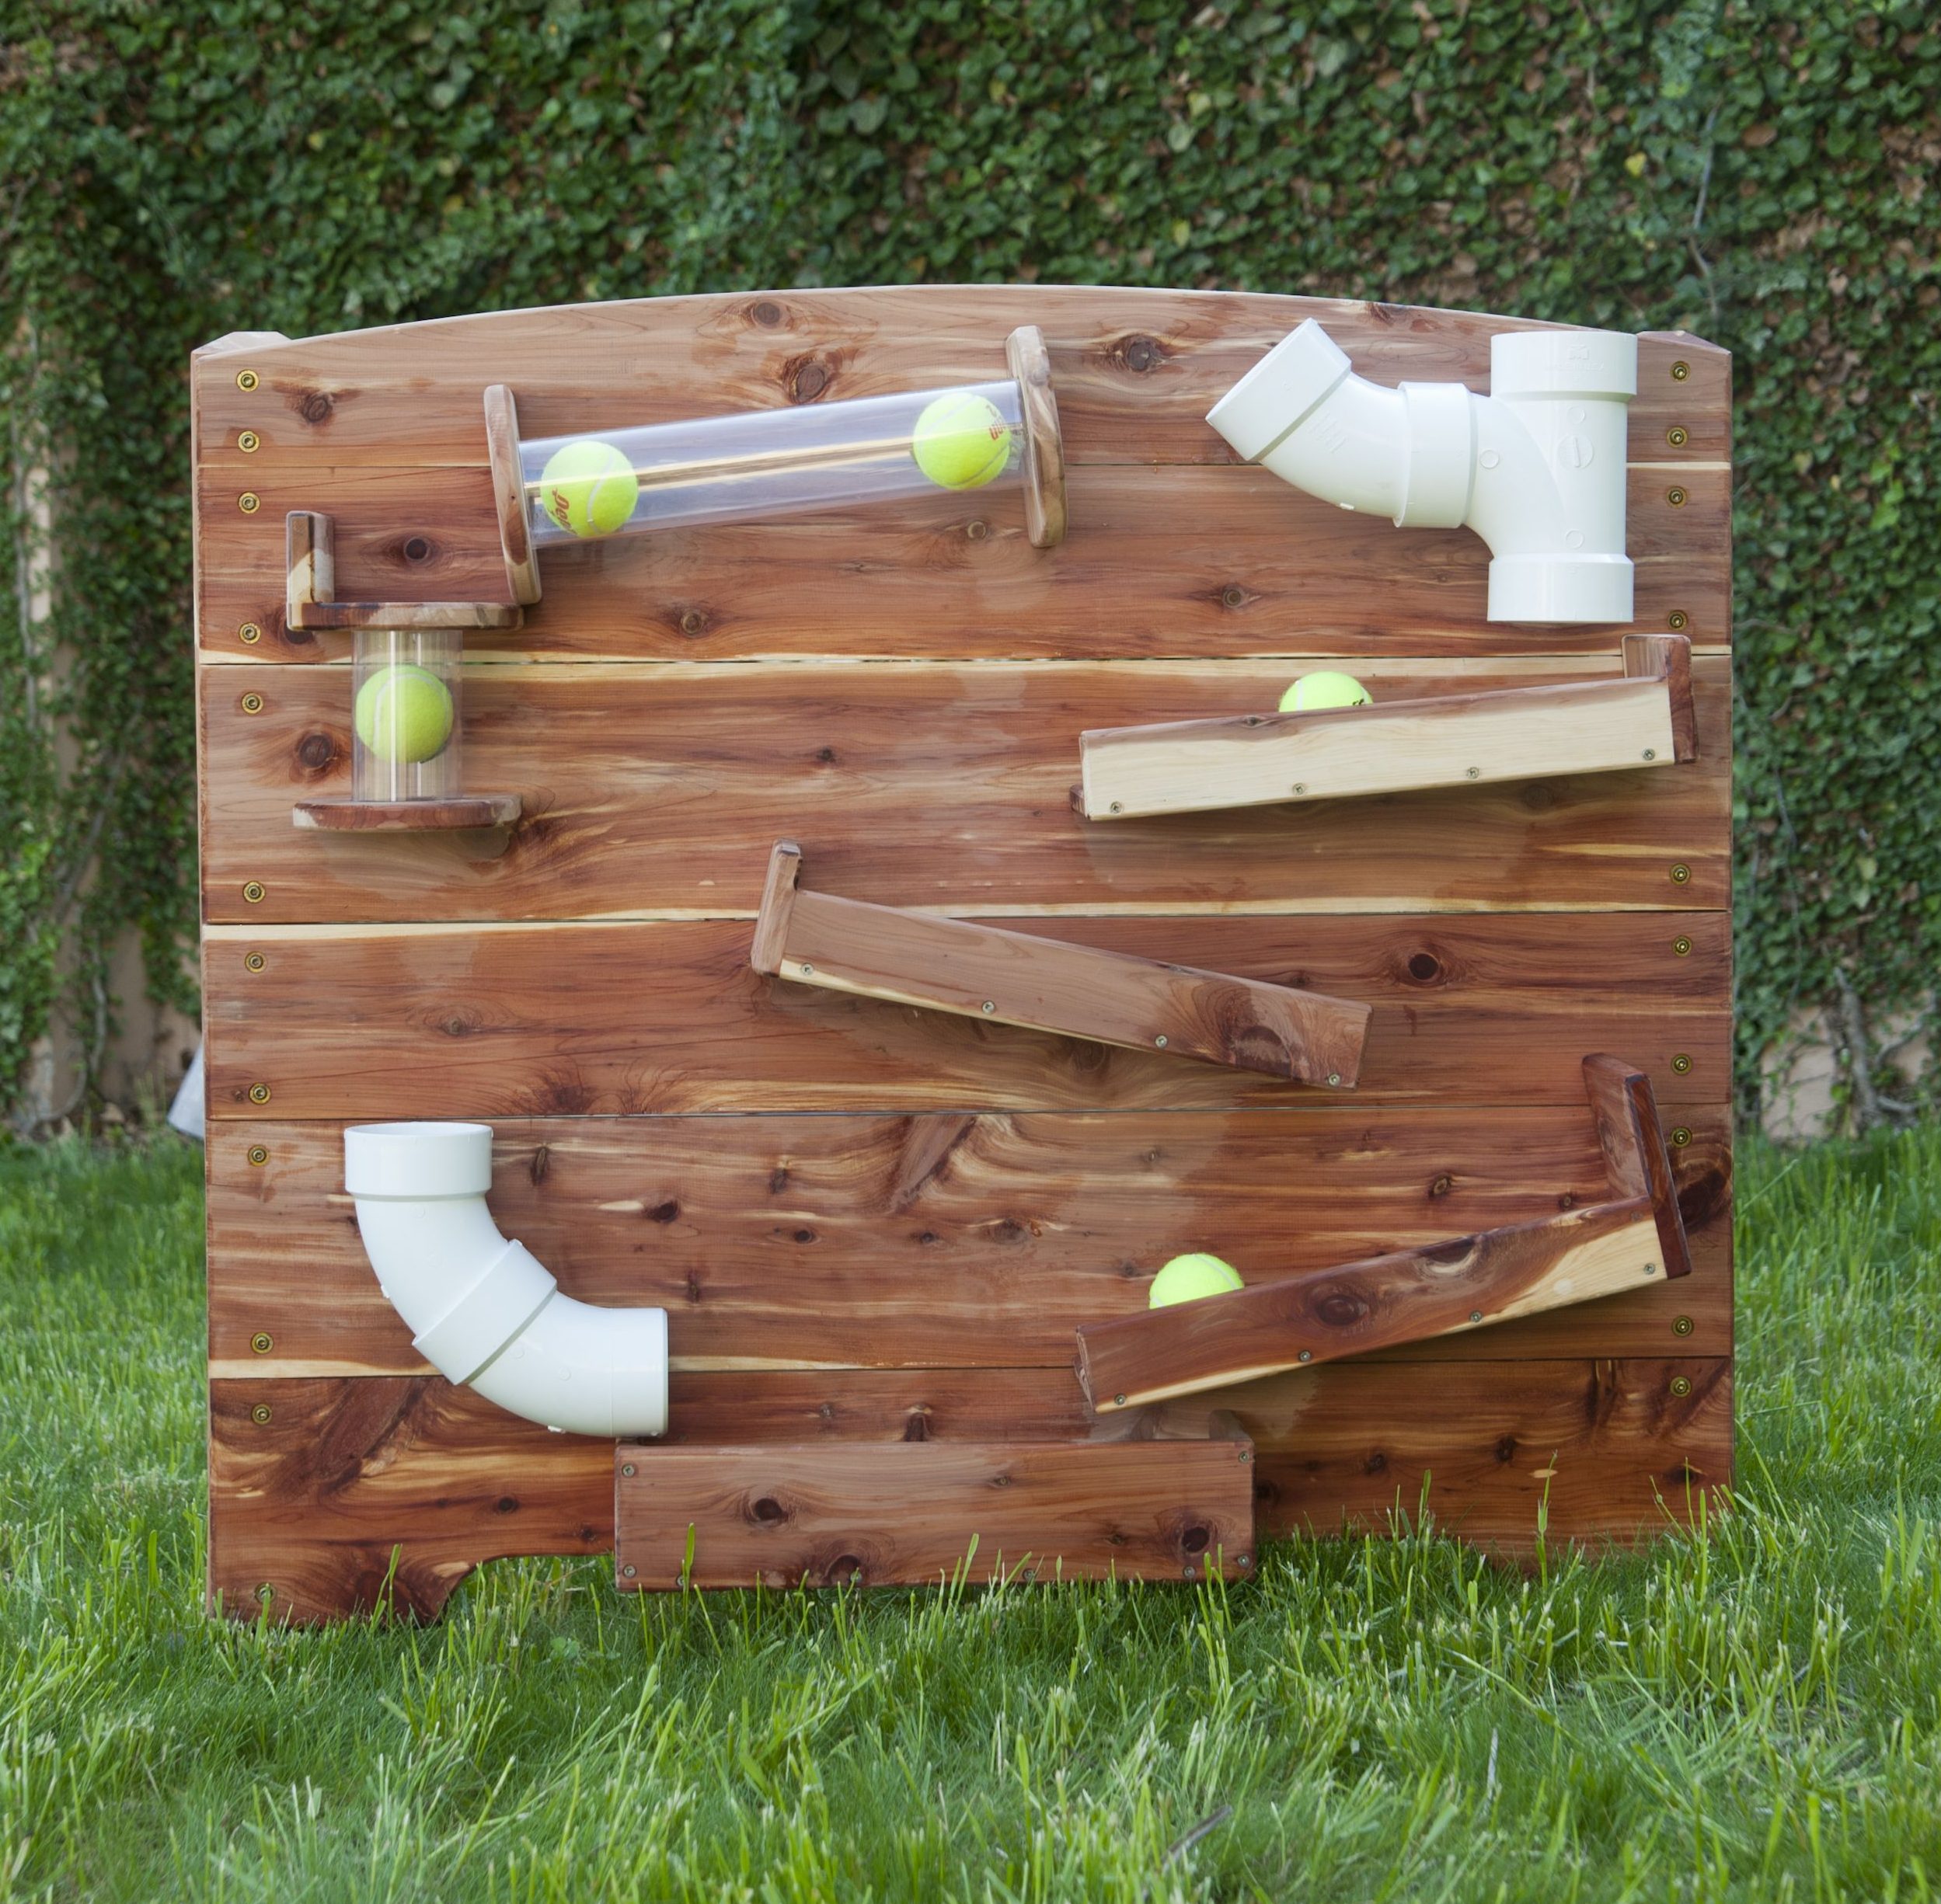 DIY backyard ball run made from plywood